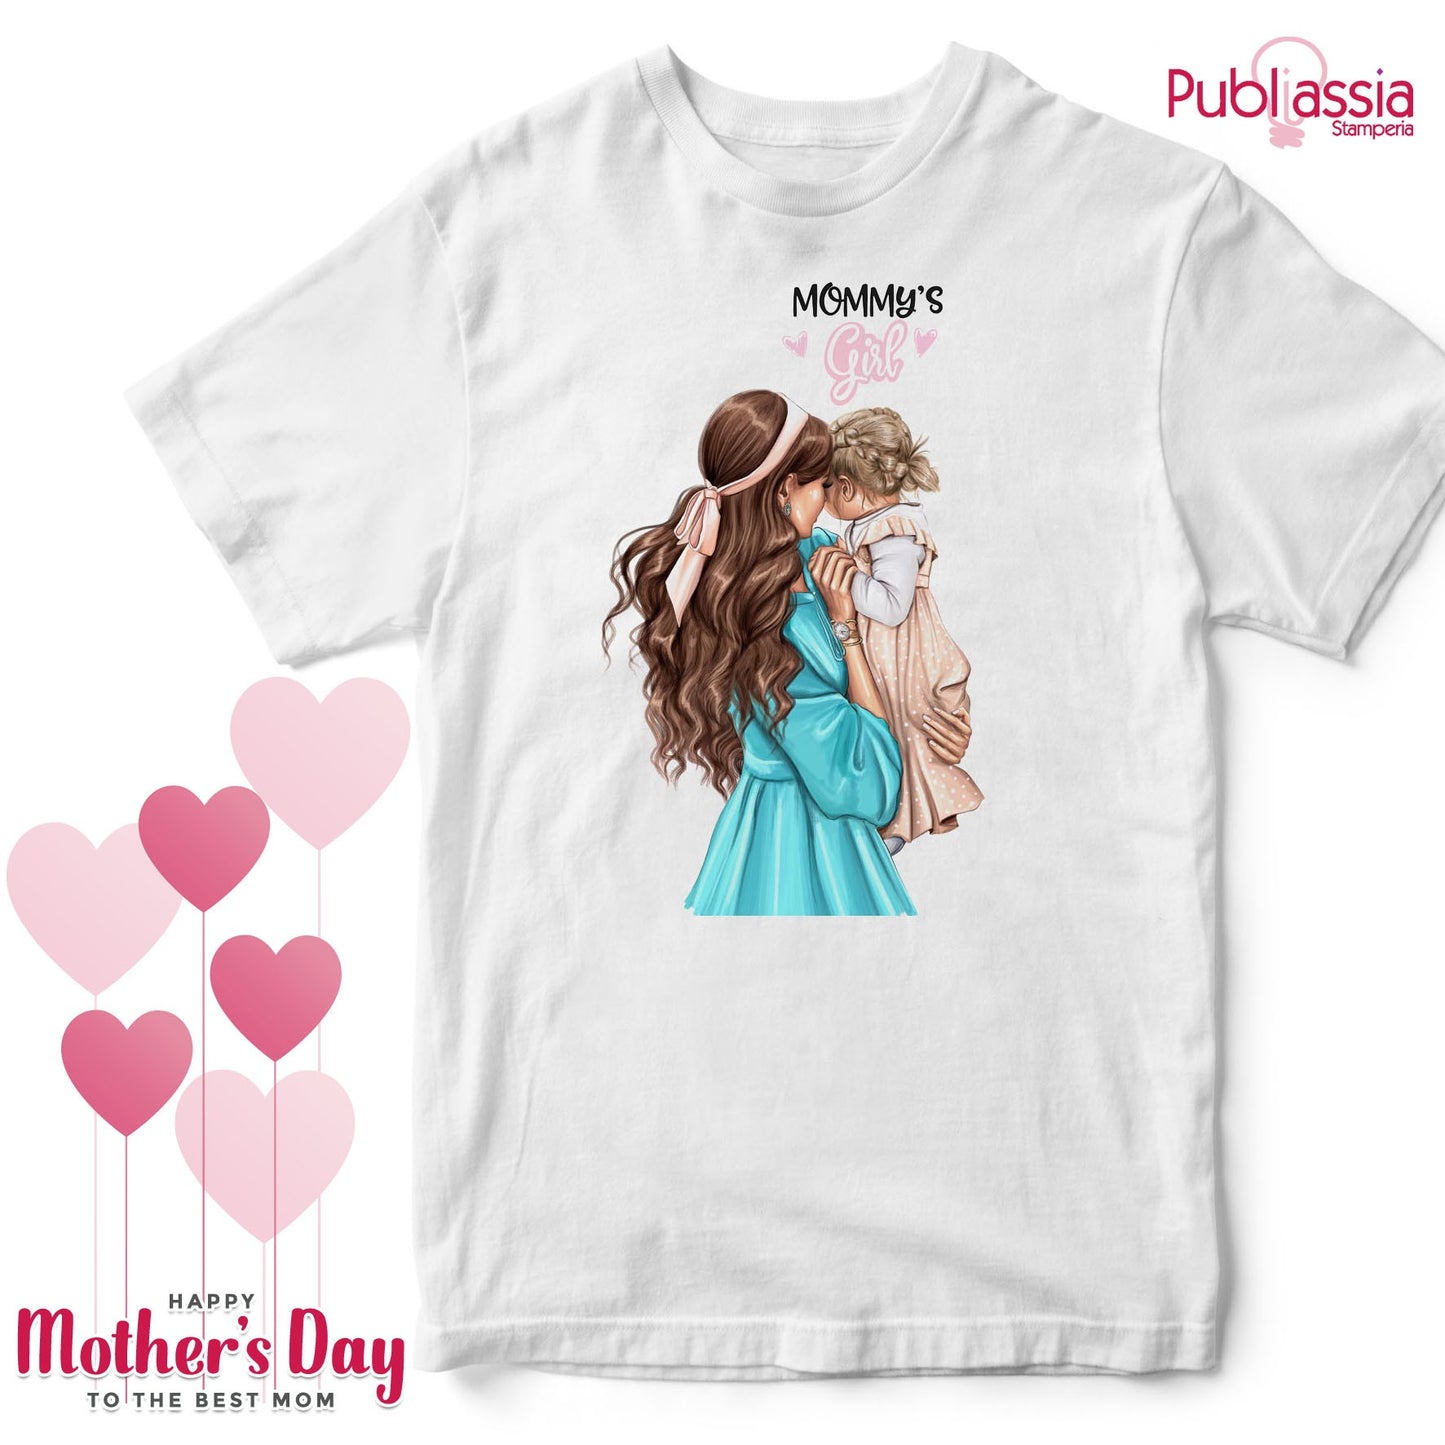 Mommy's Girl - Festa della Mamma t-shirt